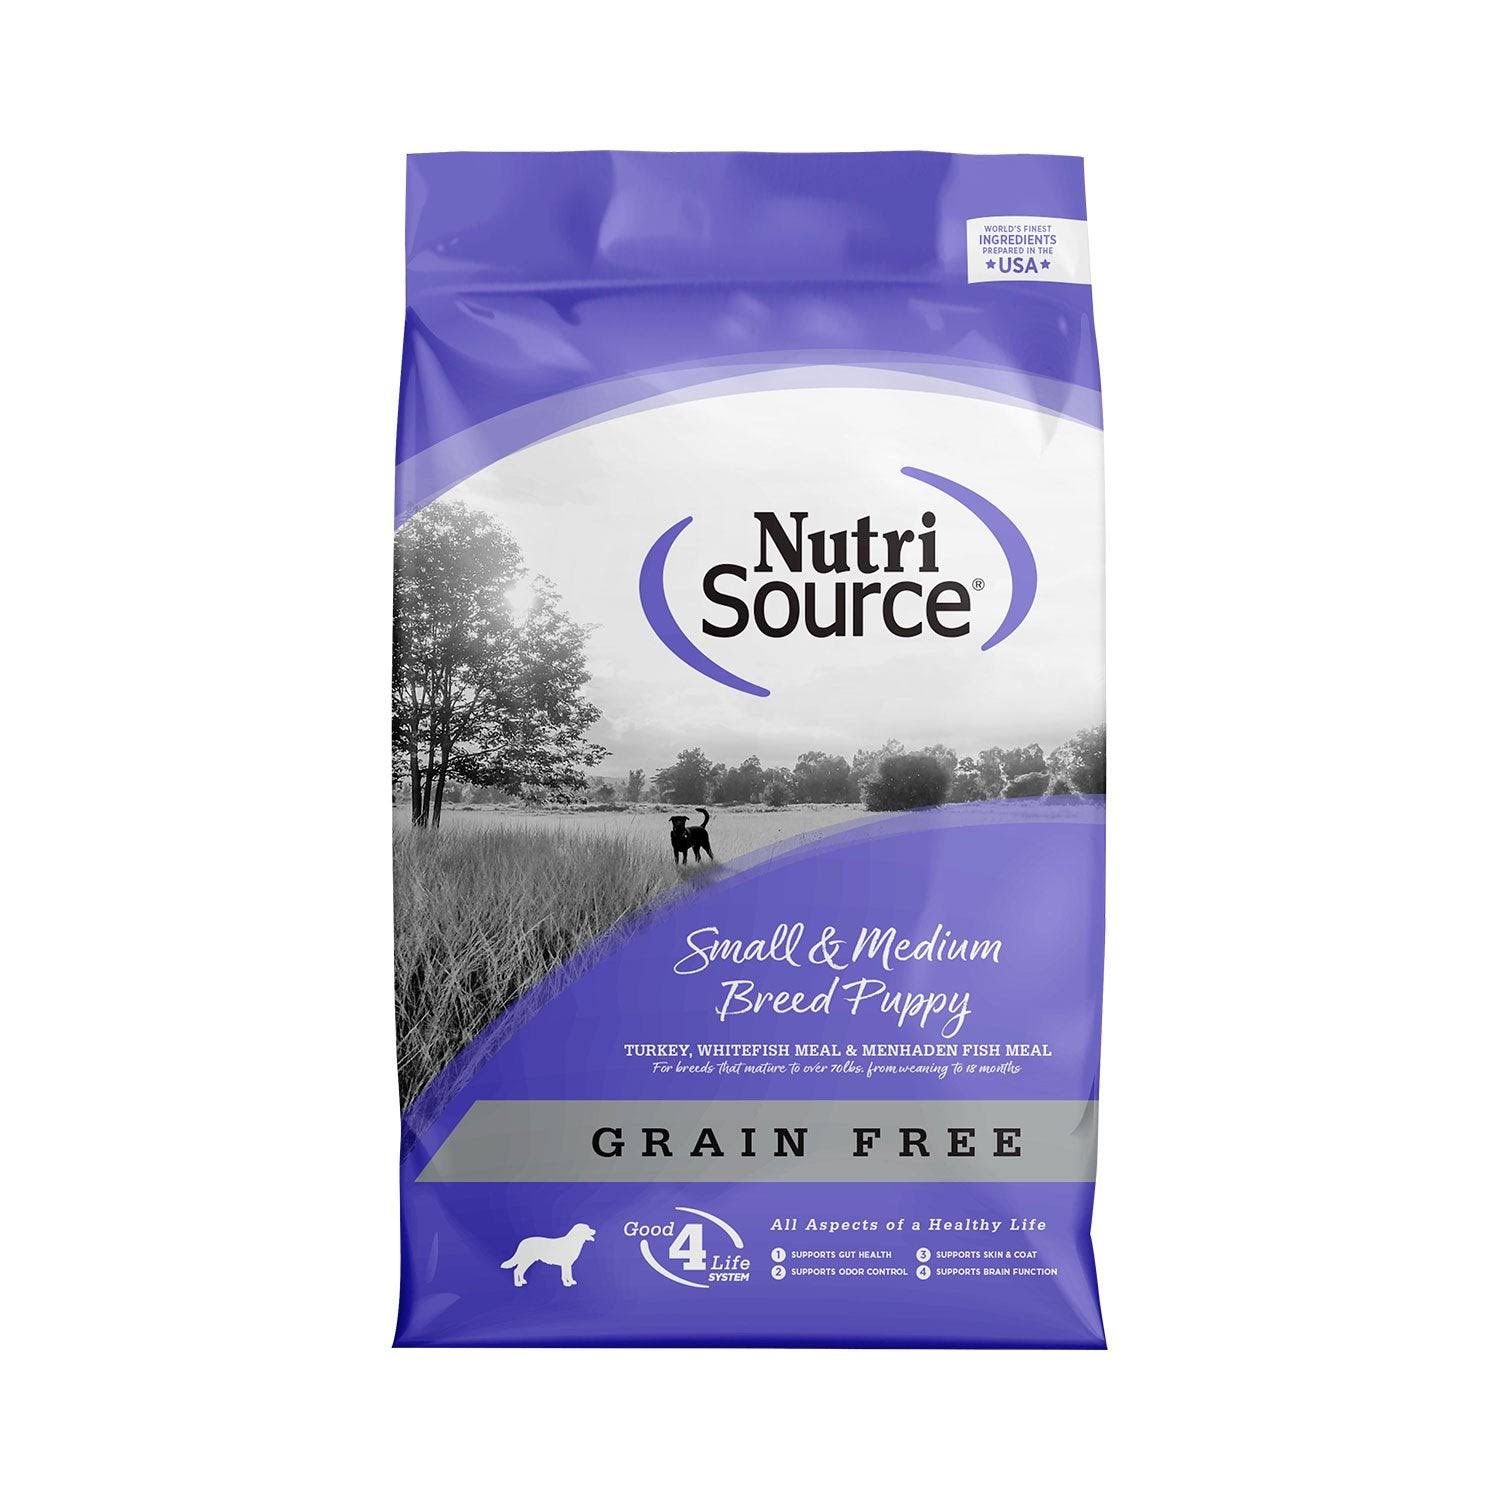 NutriSource Small & Medium Breed Grain Free Puppy Food 5 lbs